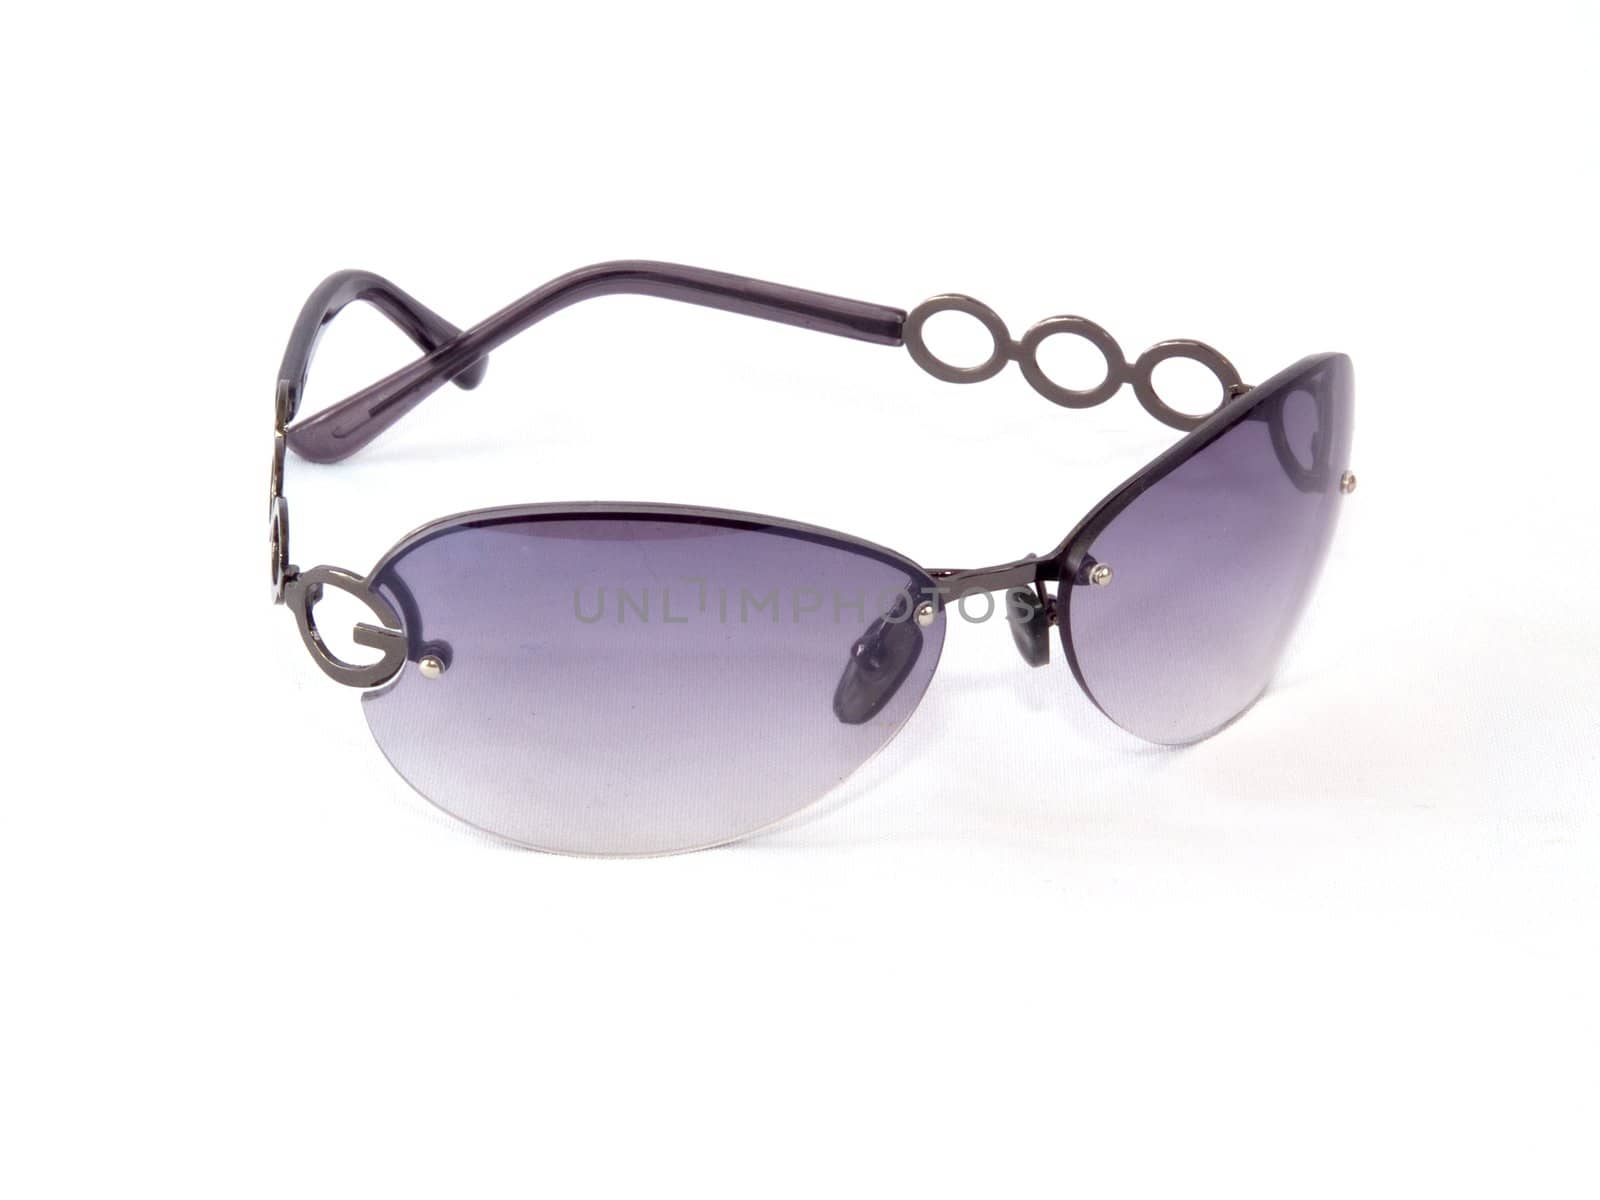 Violet fashion sunglasses